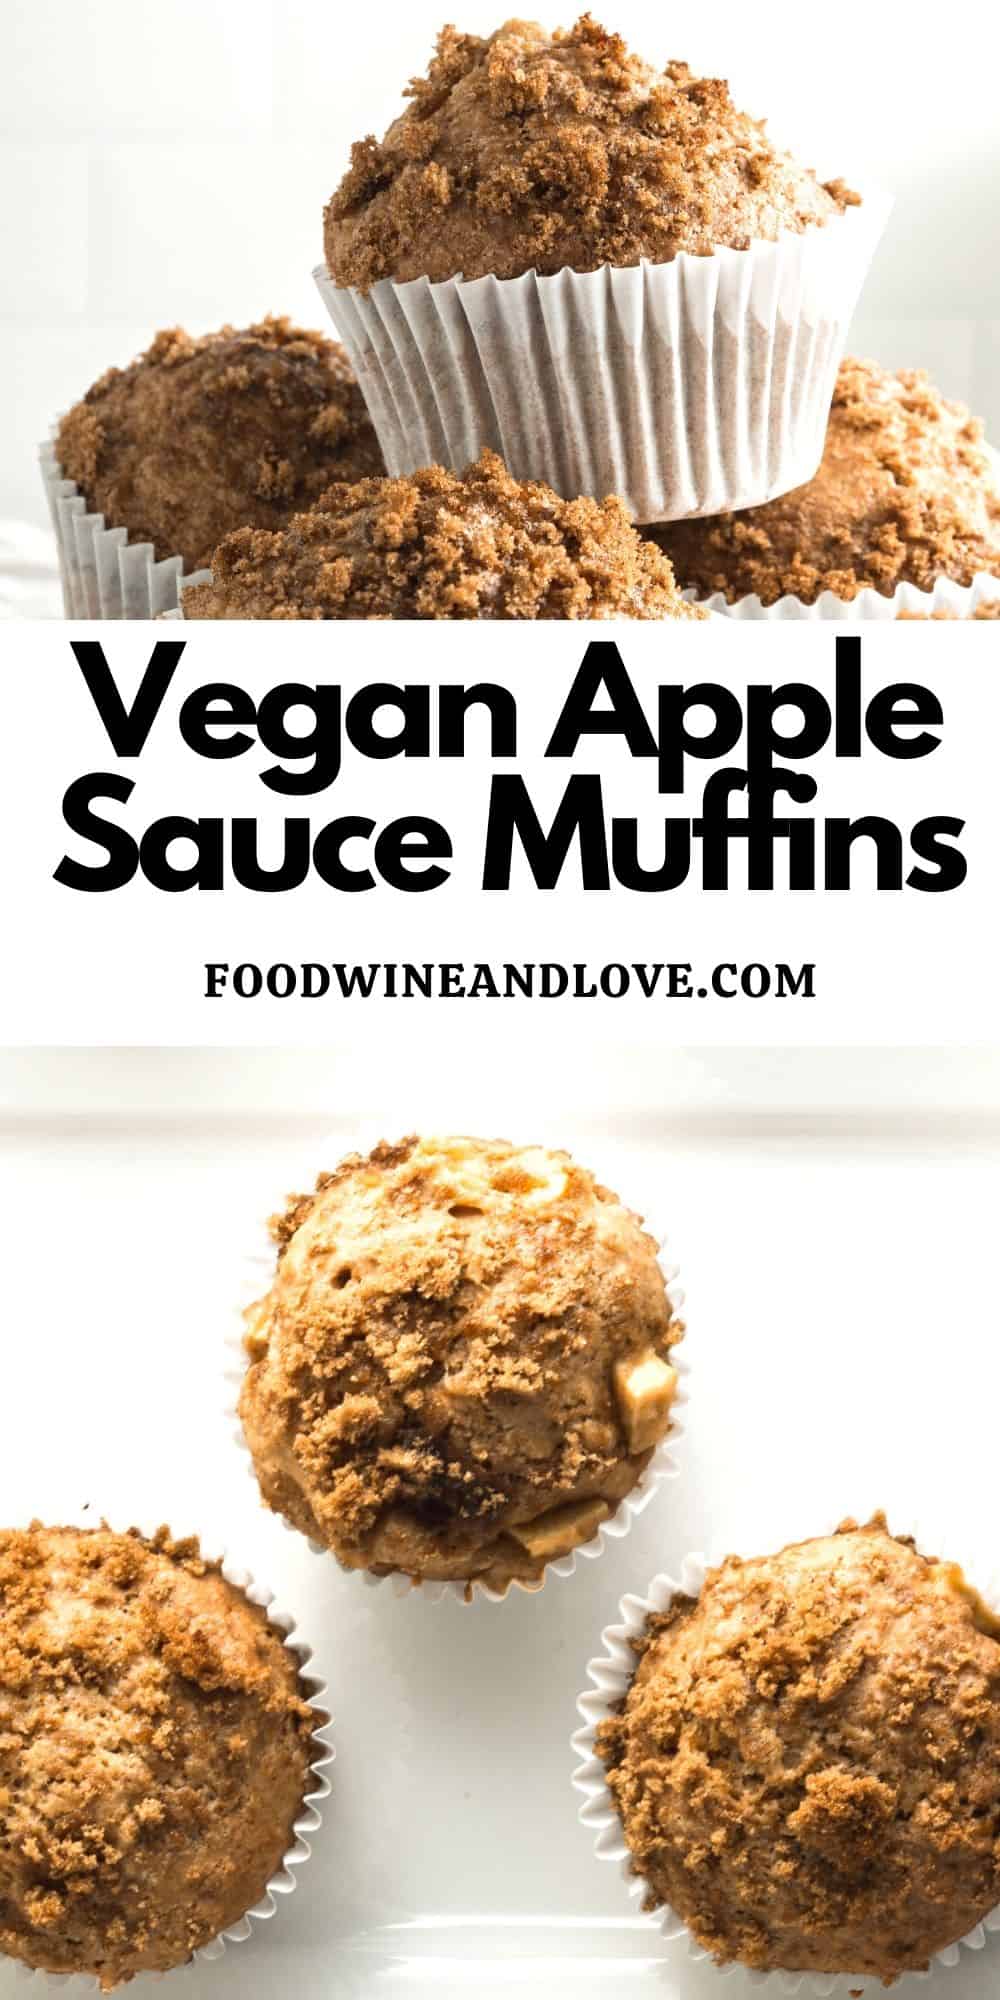 Vegan Applesauce Muffins